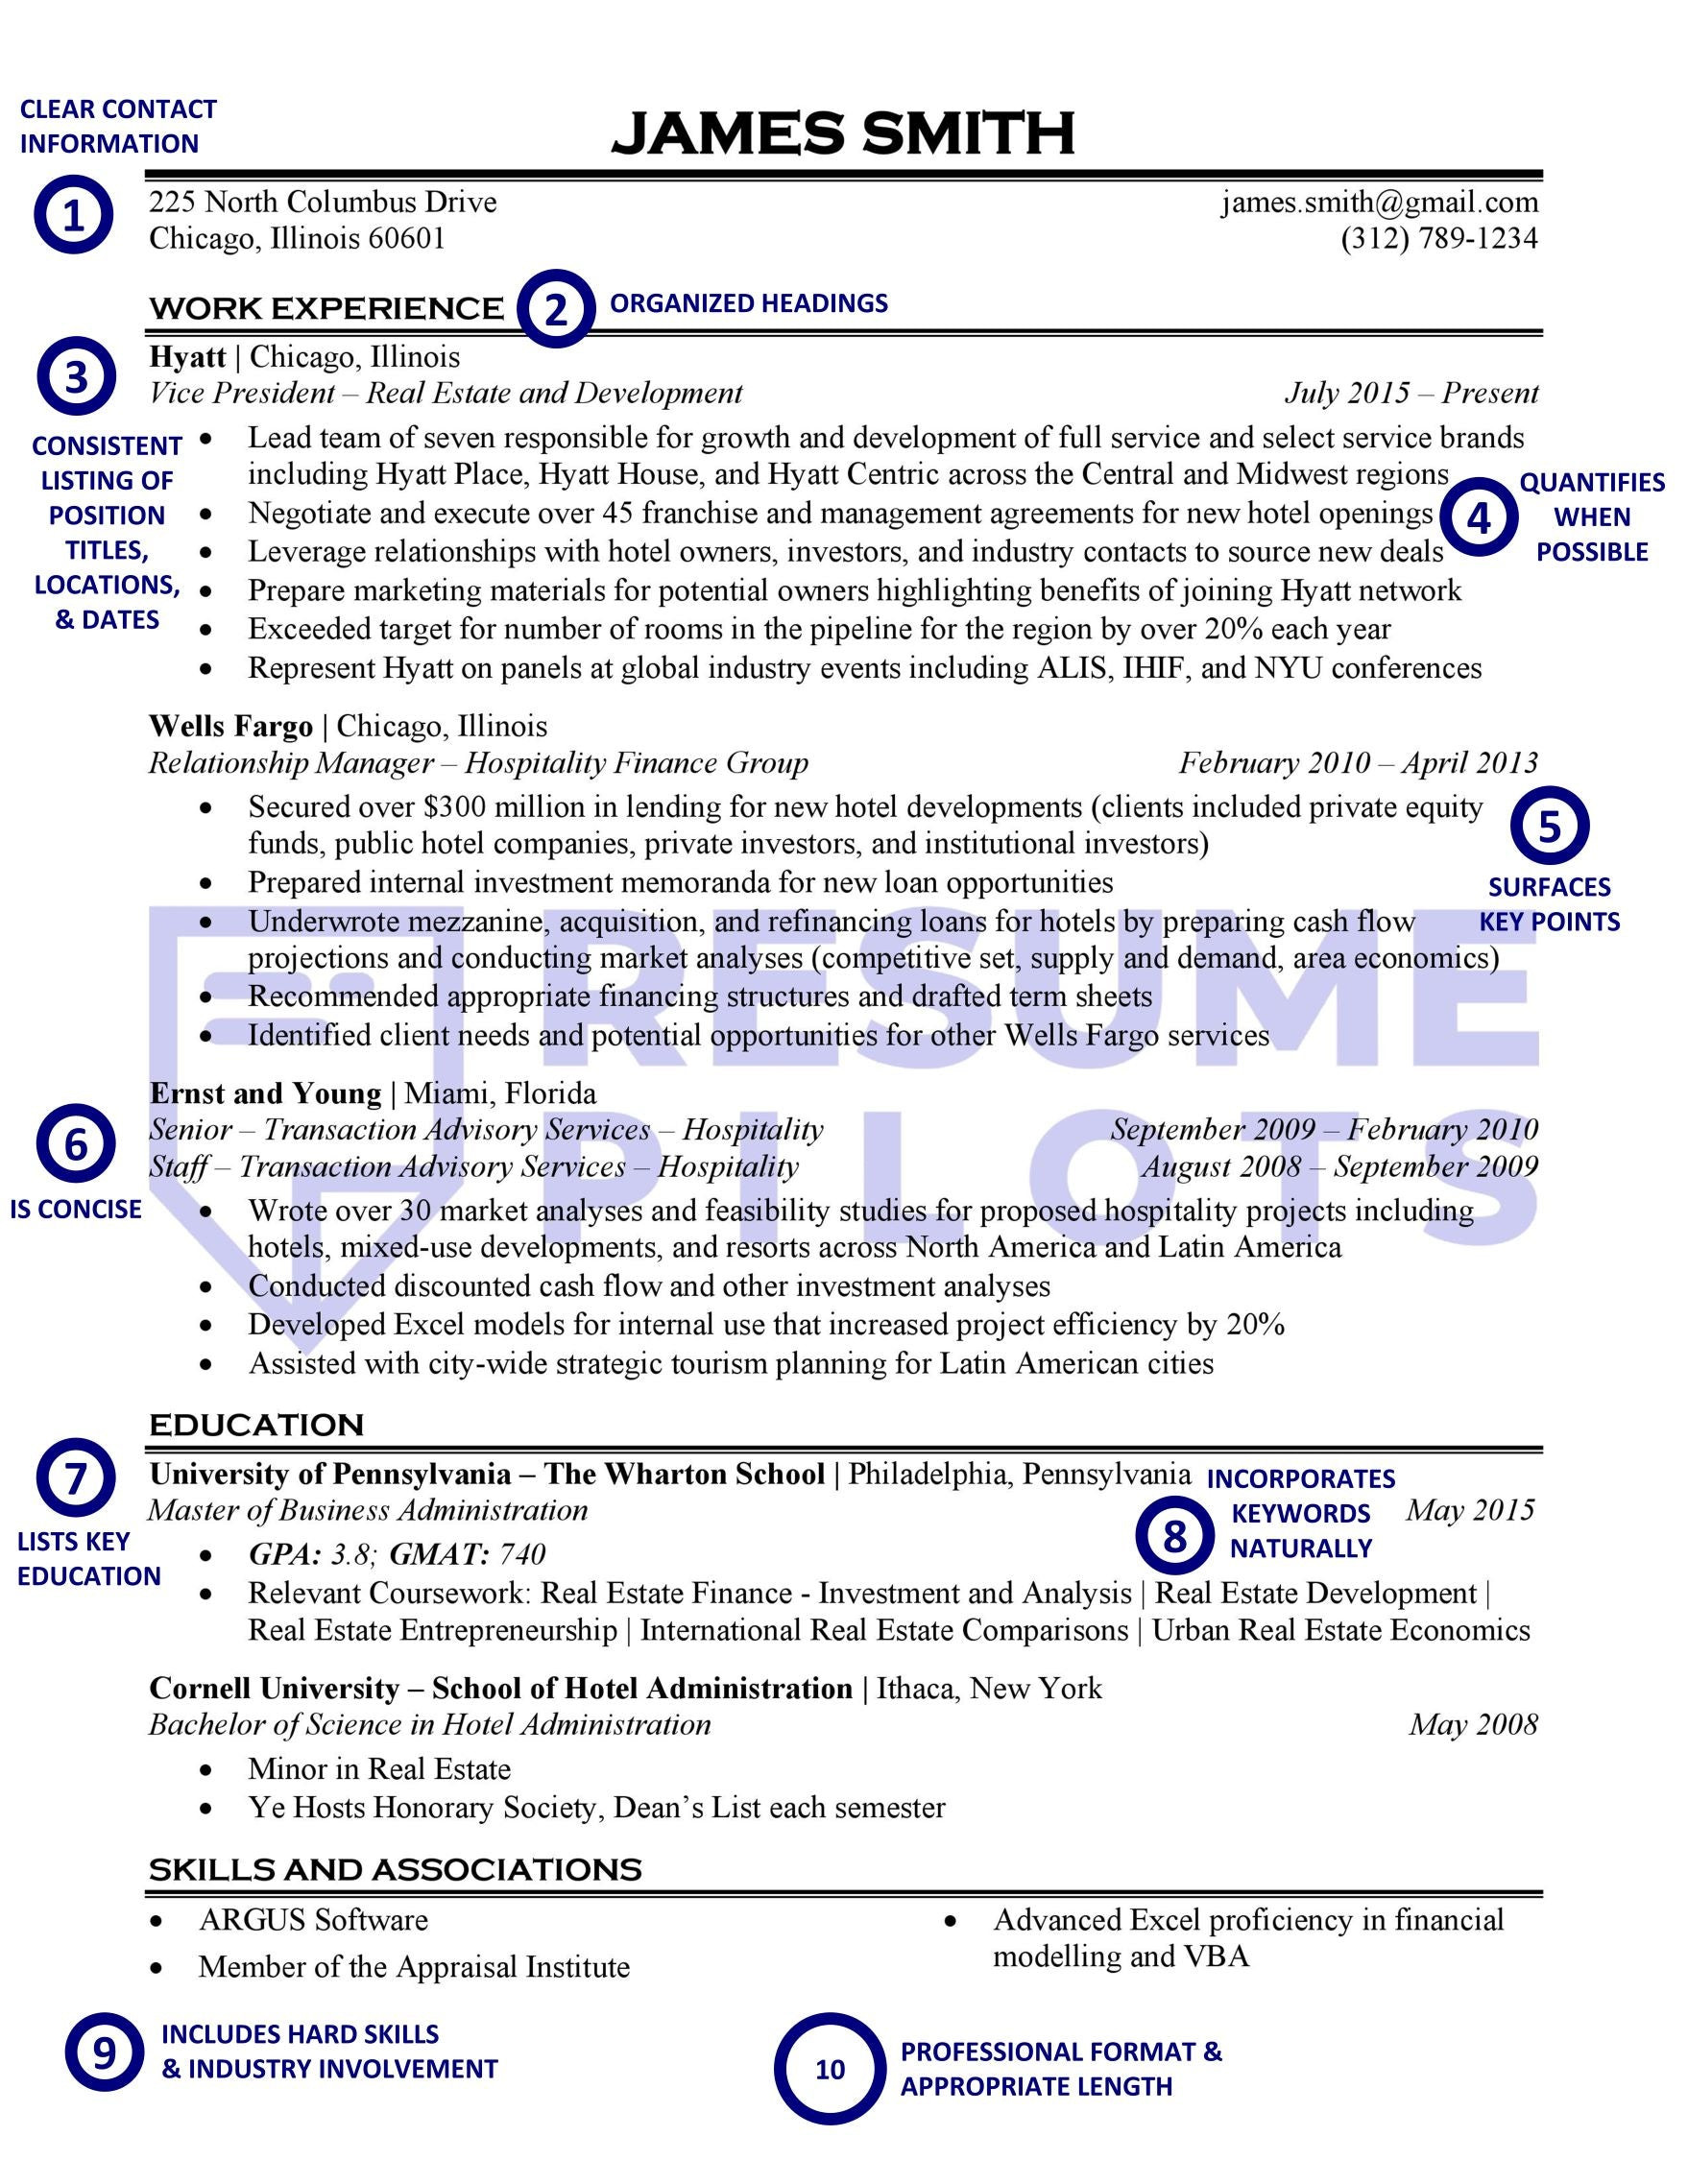 Florida Real Estate Certification Resume Sample Vp Real Estate Resume Example [10 Reasons It Works] Resume Pilots